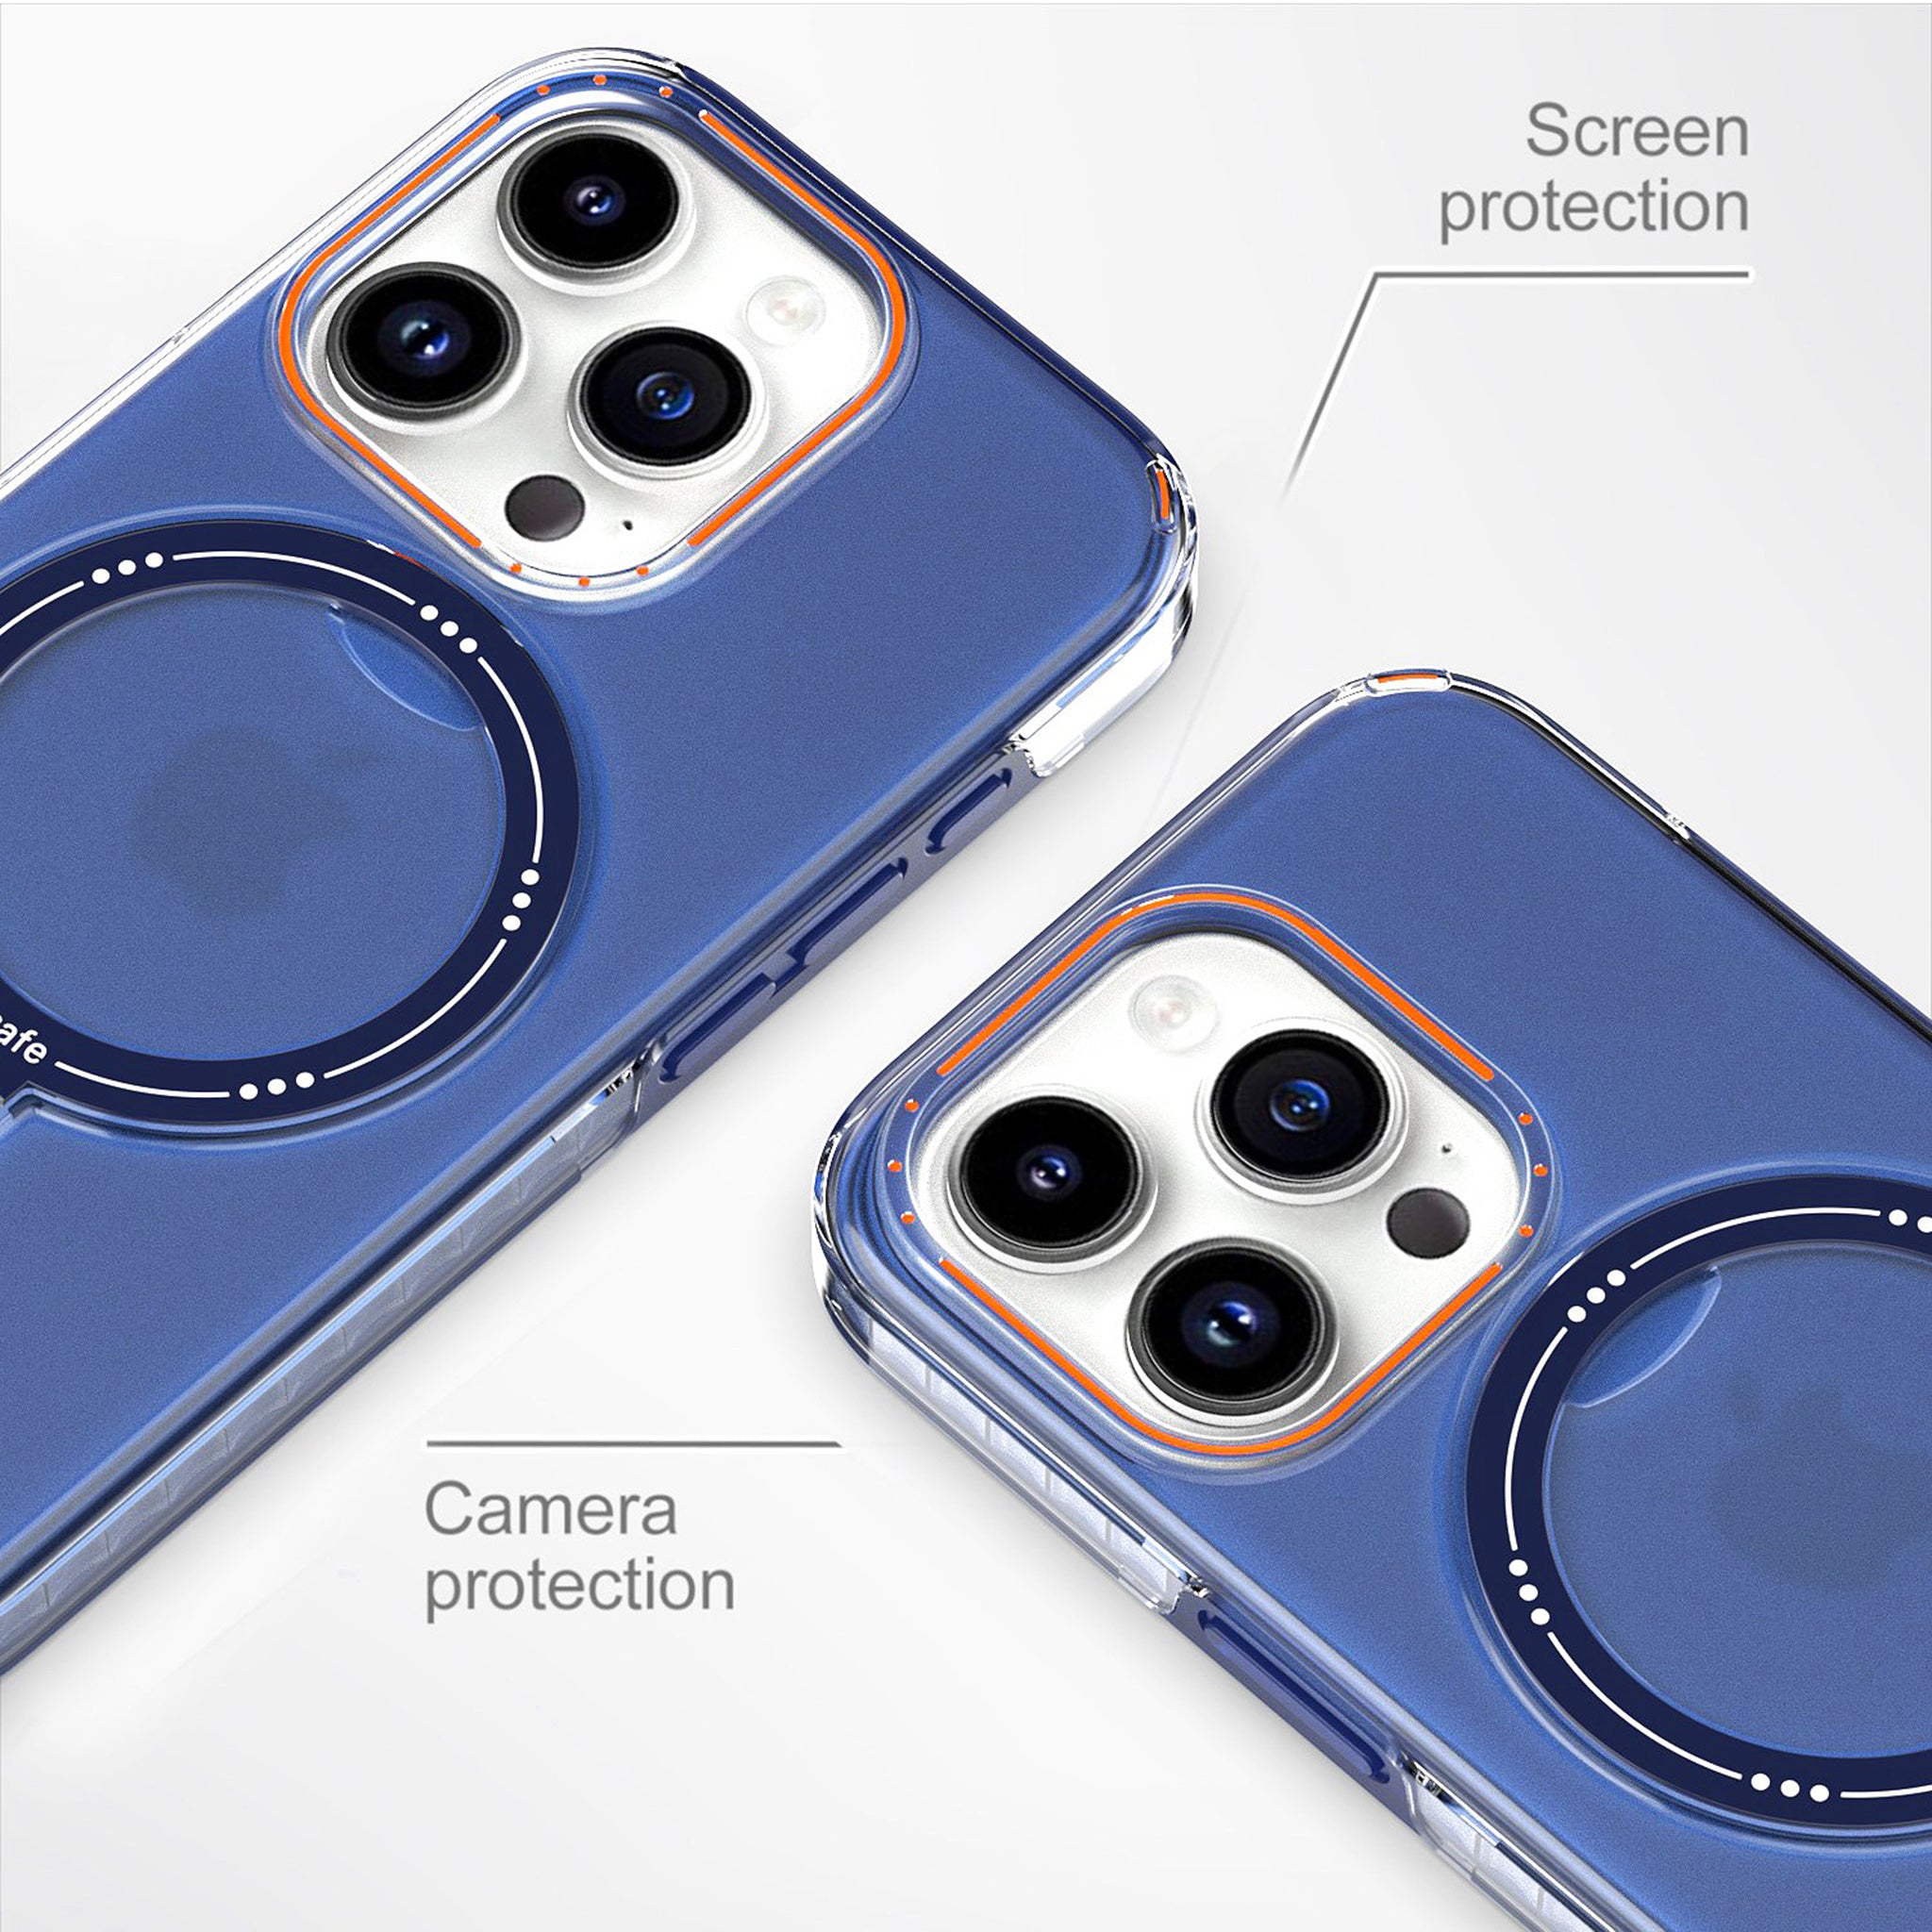 MC13 Design Case iPhone 15 Ultra